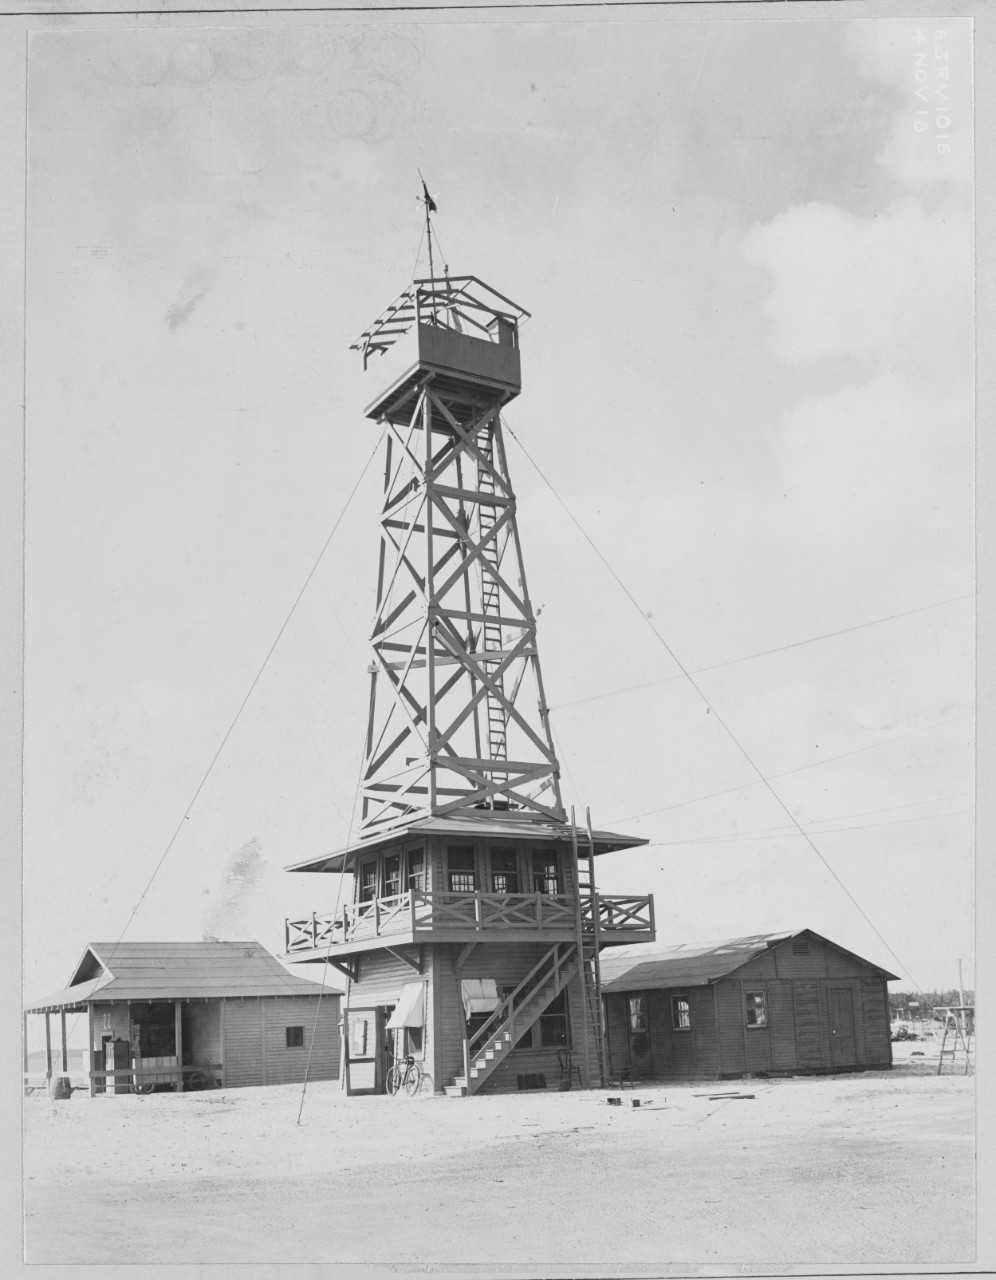 Watch tower on beach - Naval Air Station Miami, Florida.